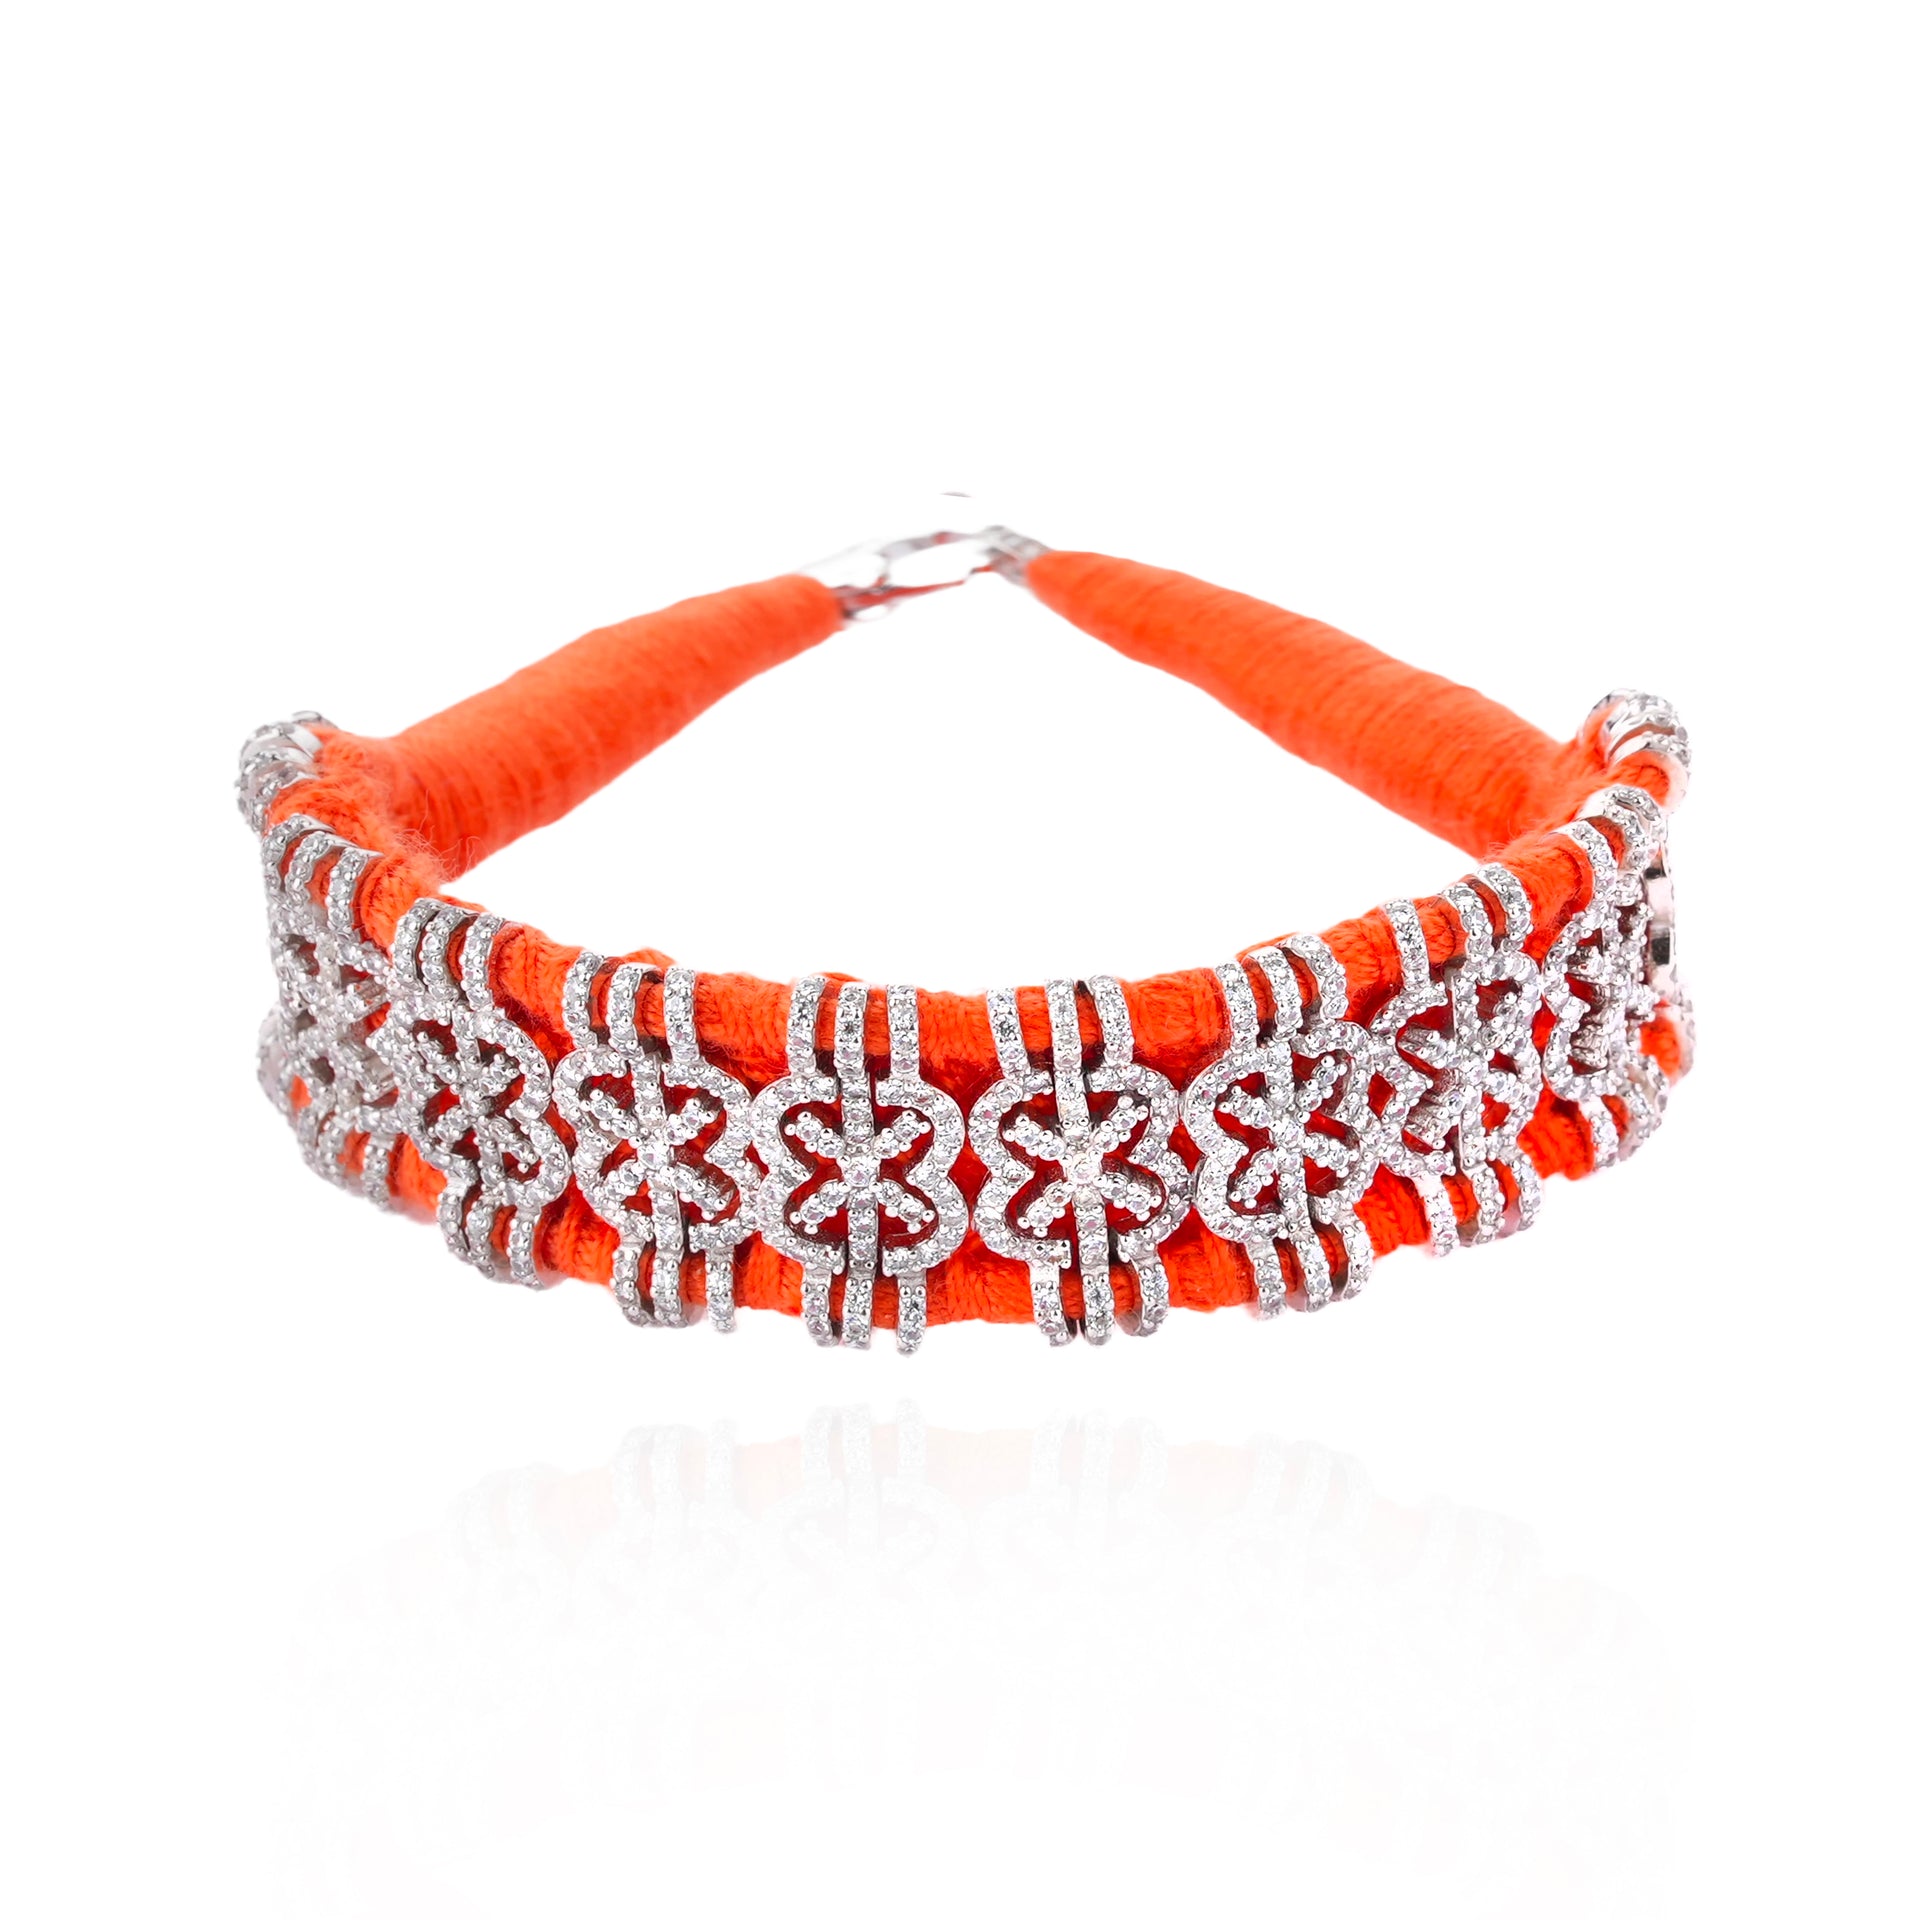 Salvador Orange bracelet in 925 silver and diamonds